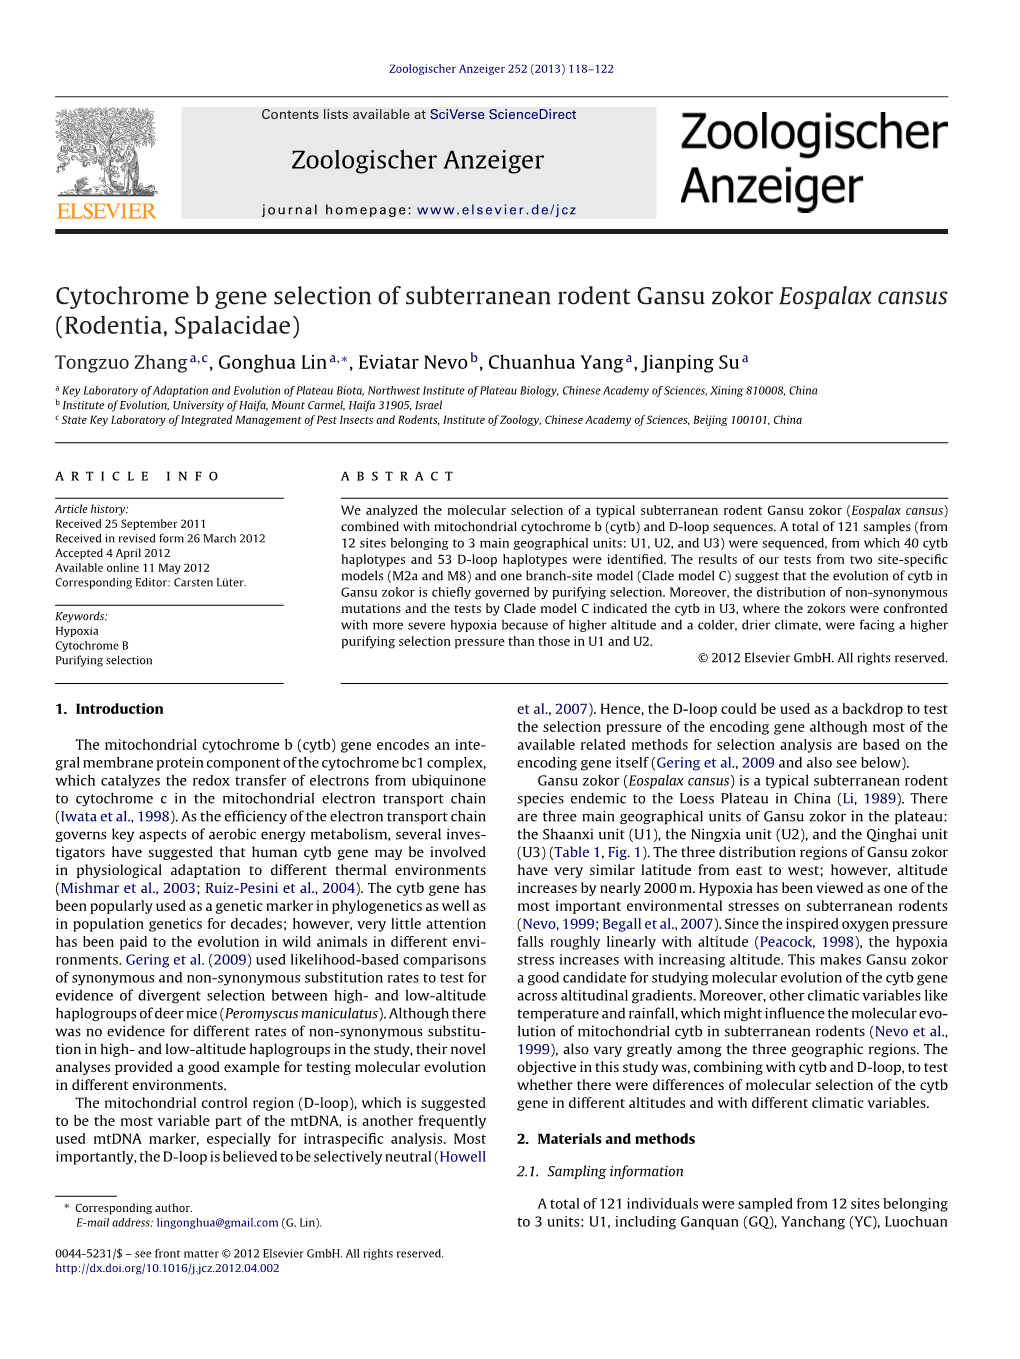 Cytochrome B Gene Selection of Subterranean Rodent Gansu Zokor